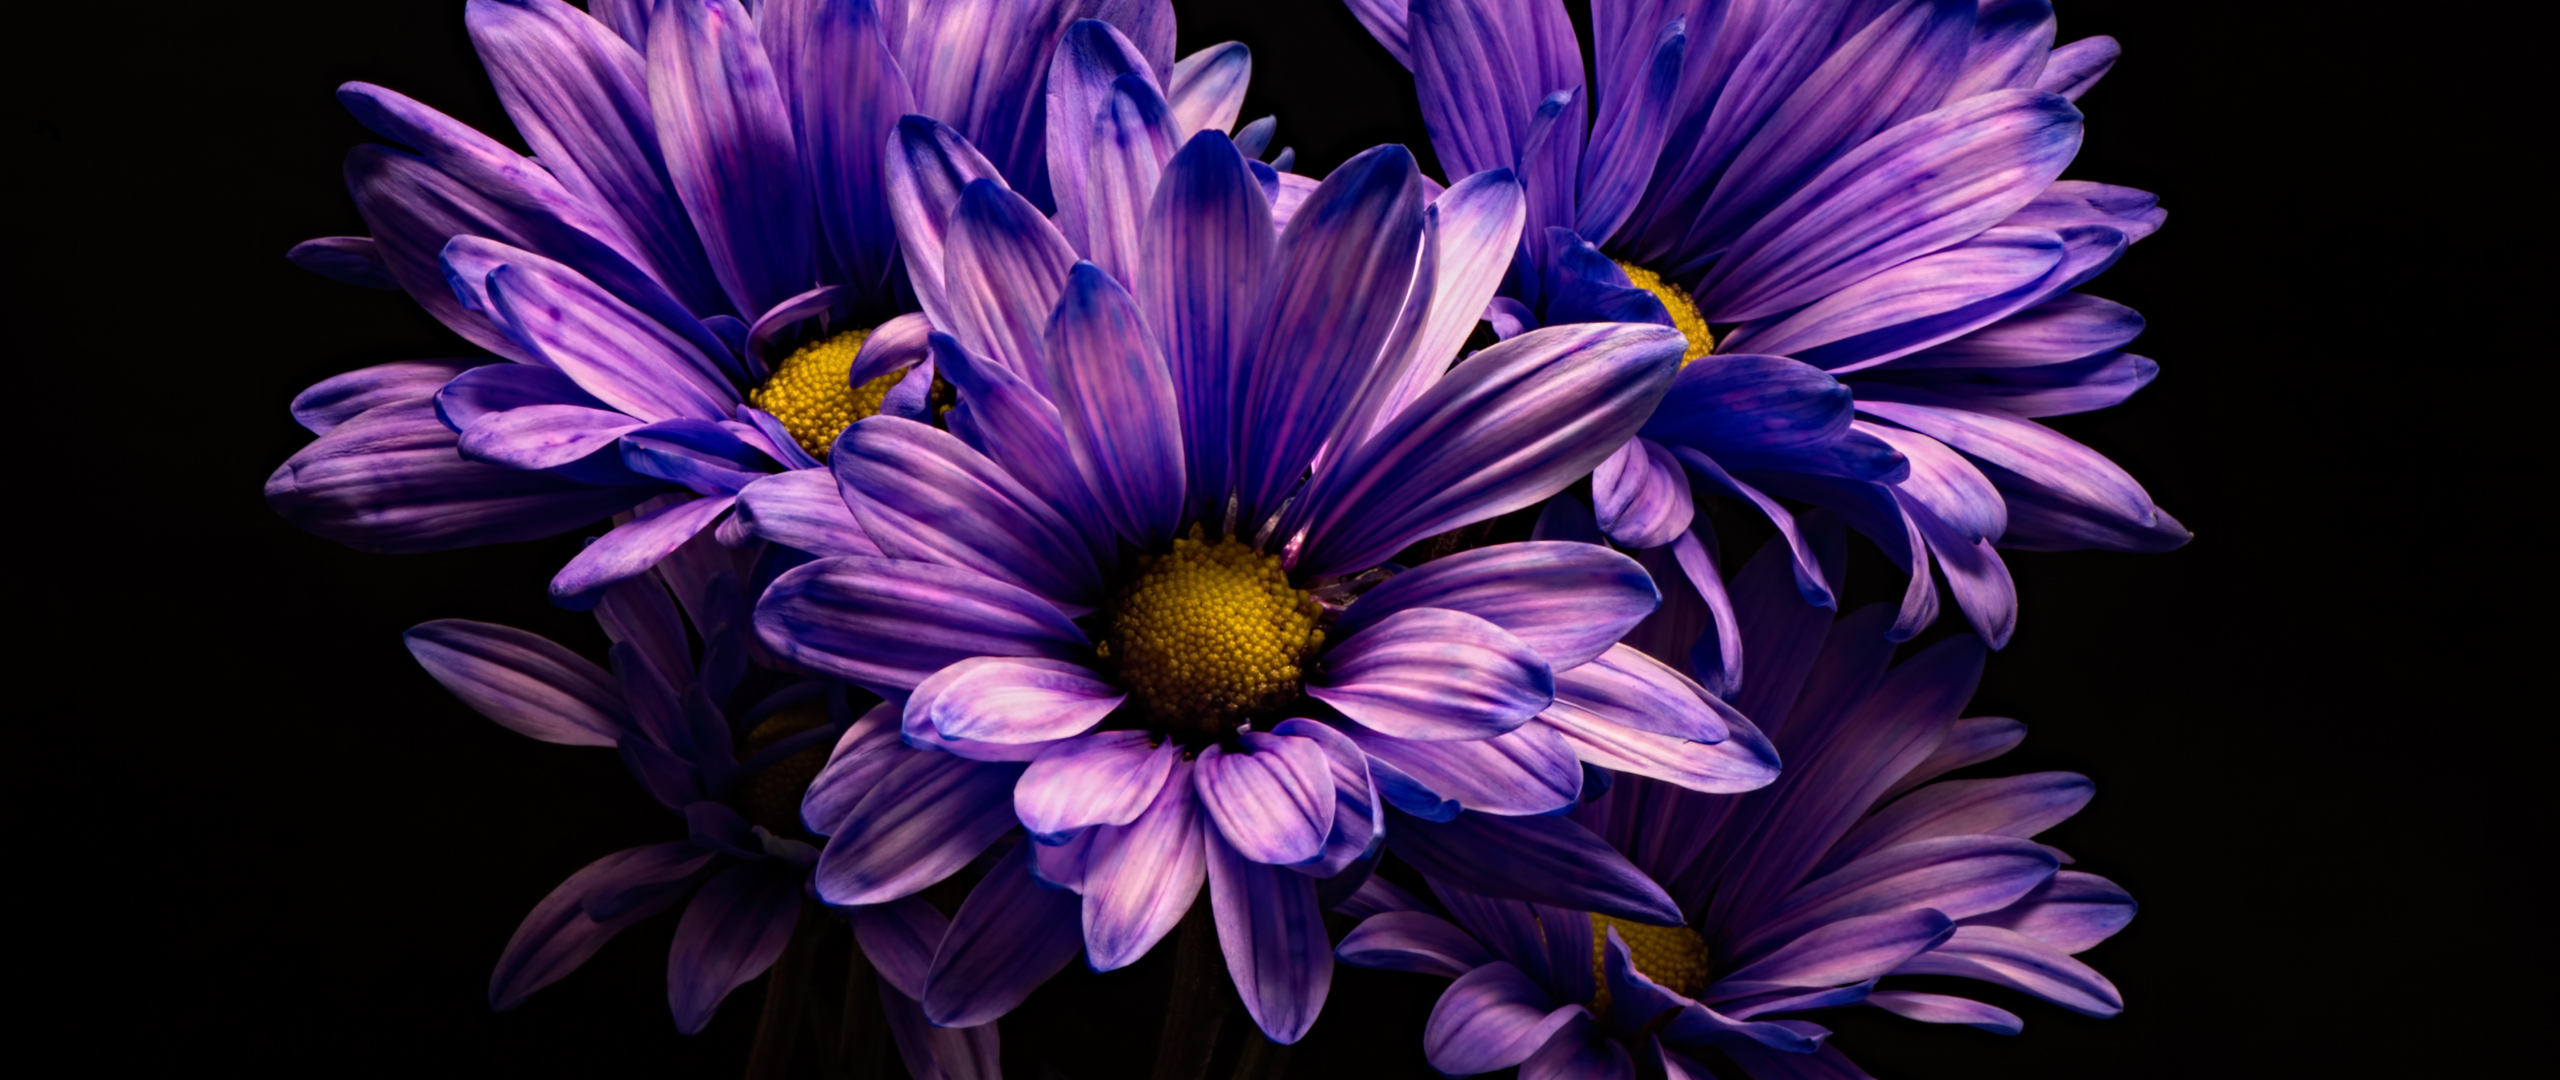 Download wallpaper 2560x1080 violet flower, chrysanthemum, flower, dual ...